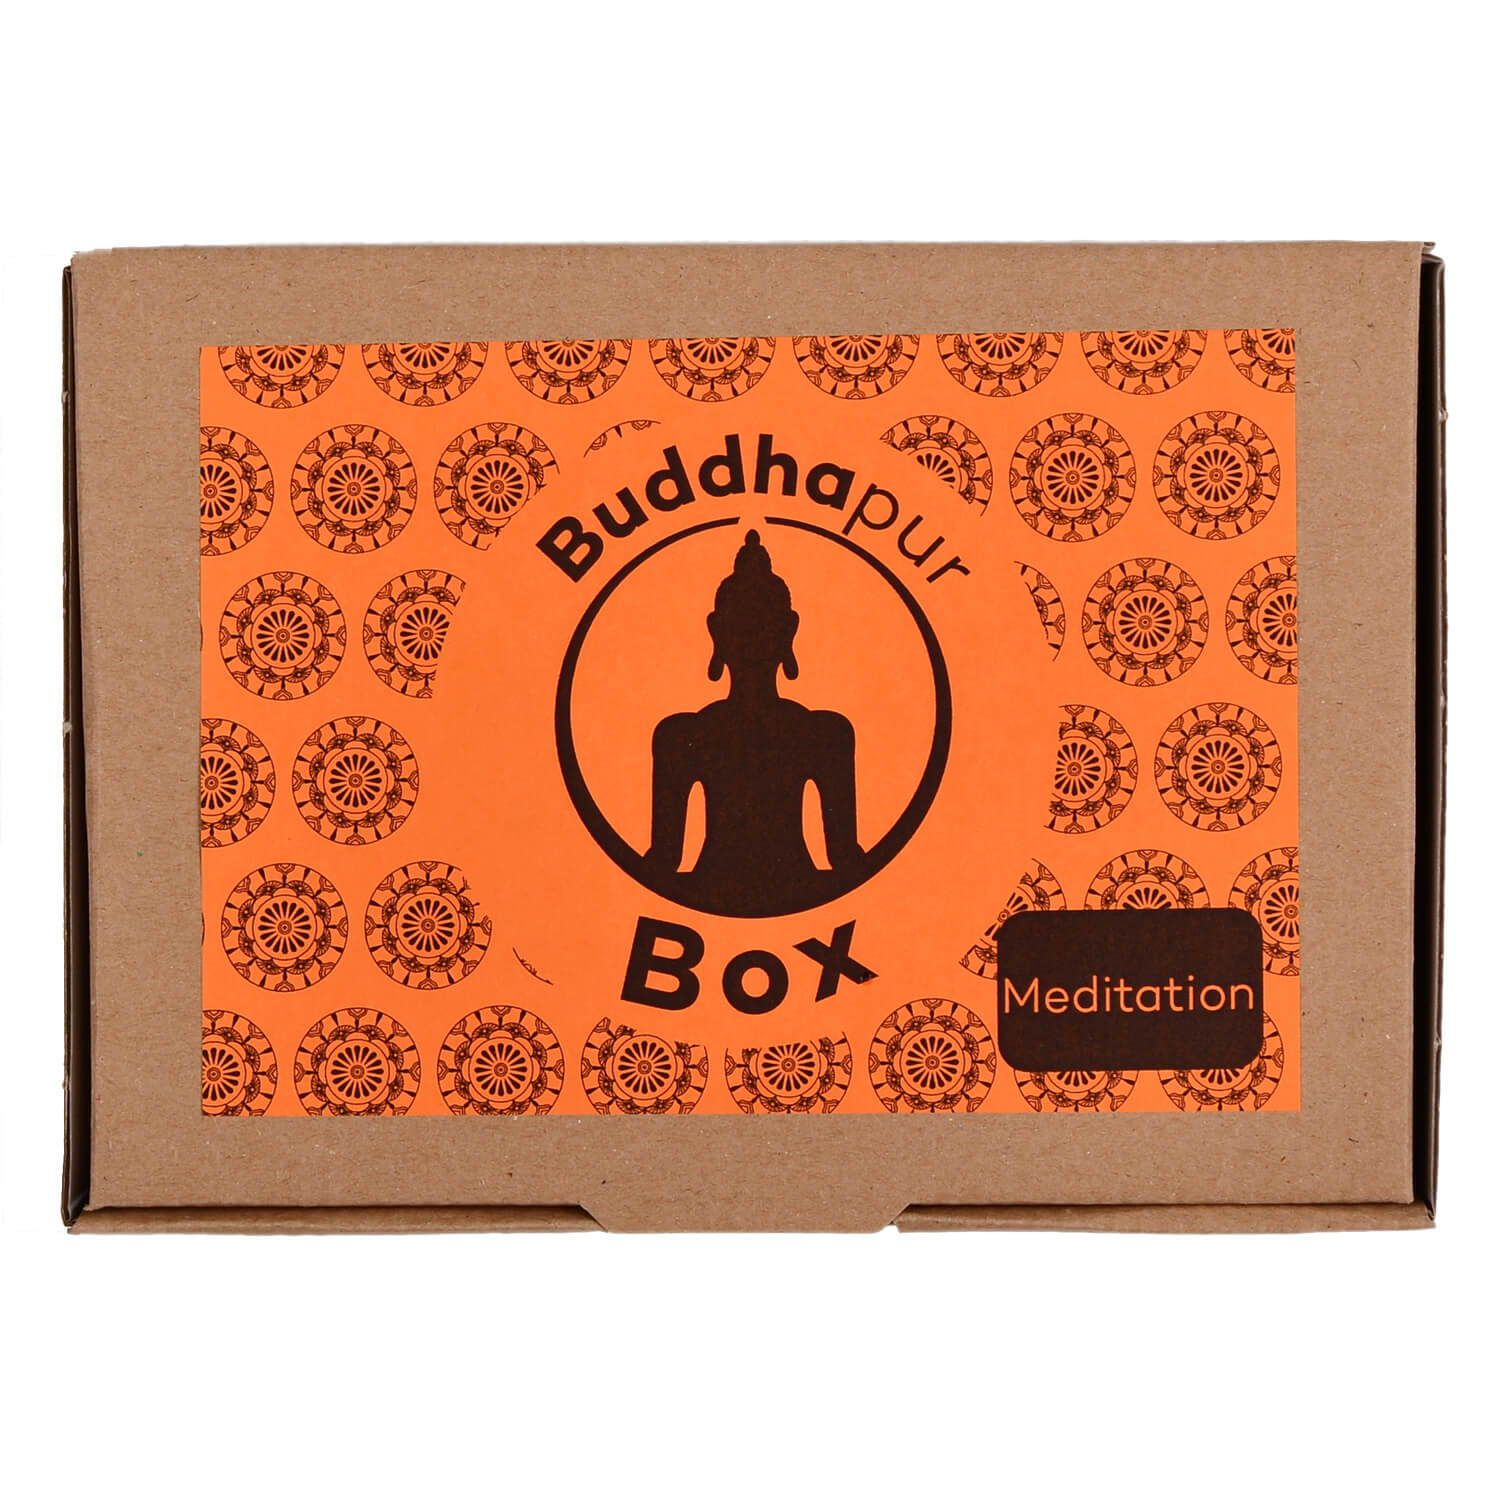 Buddhapur Box Meditation: Verpackung